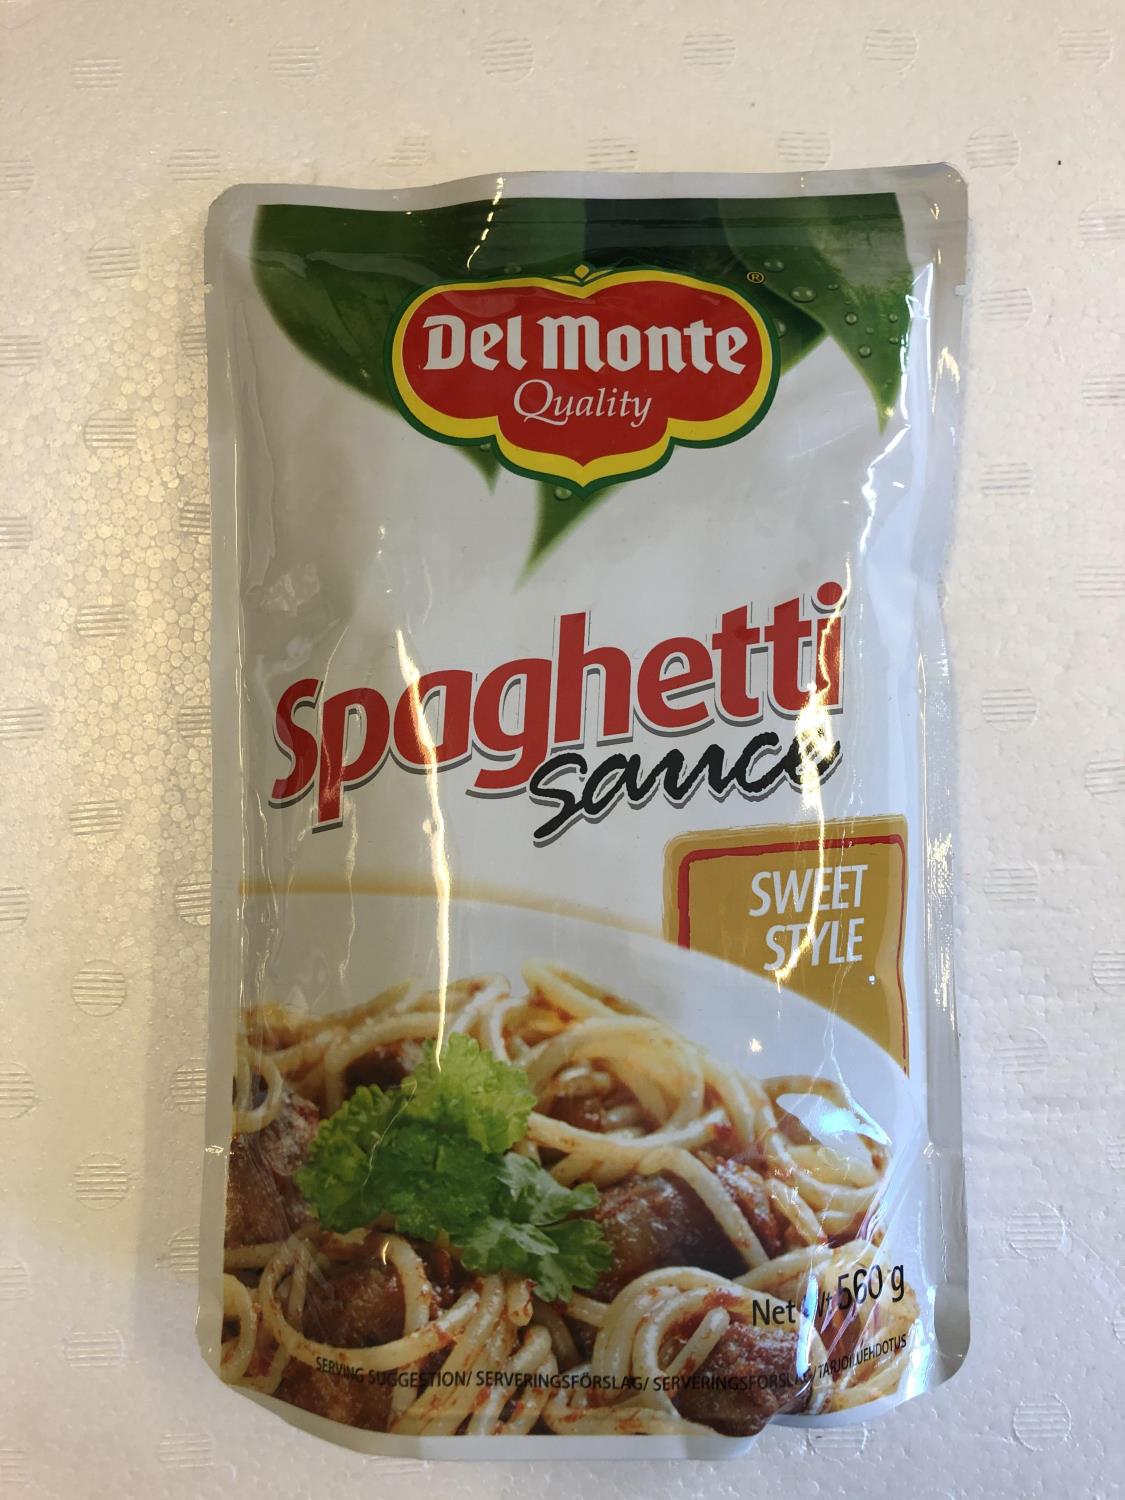 'DEL MONTE Spaghetti Sauce Sweet Style 560g